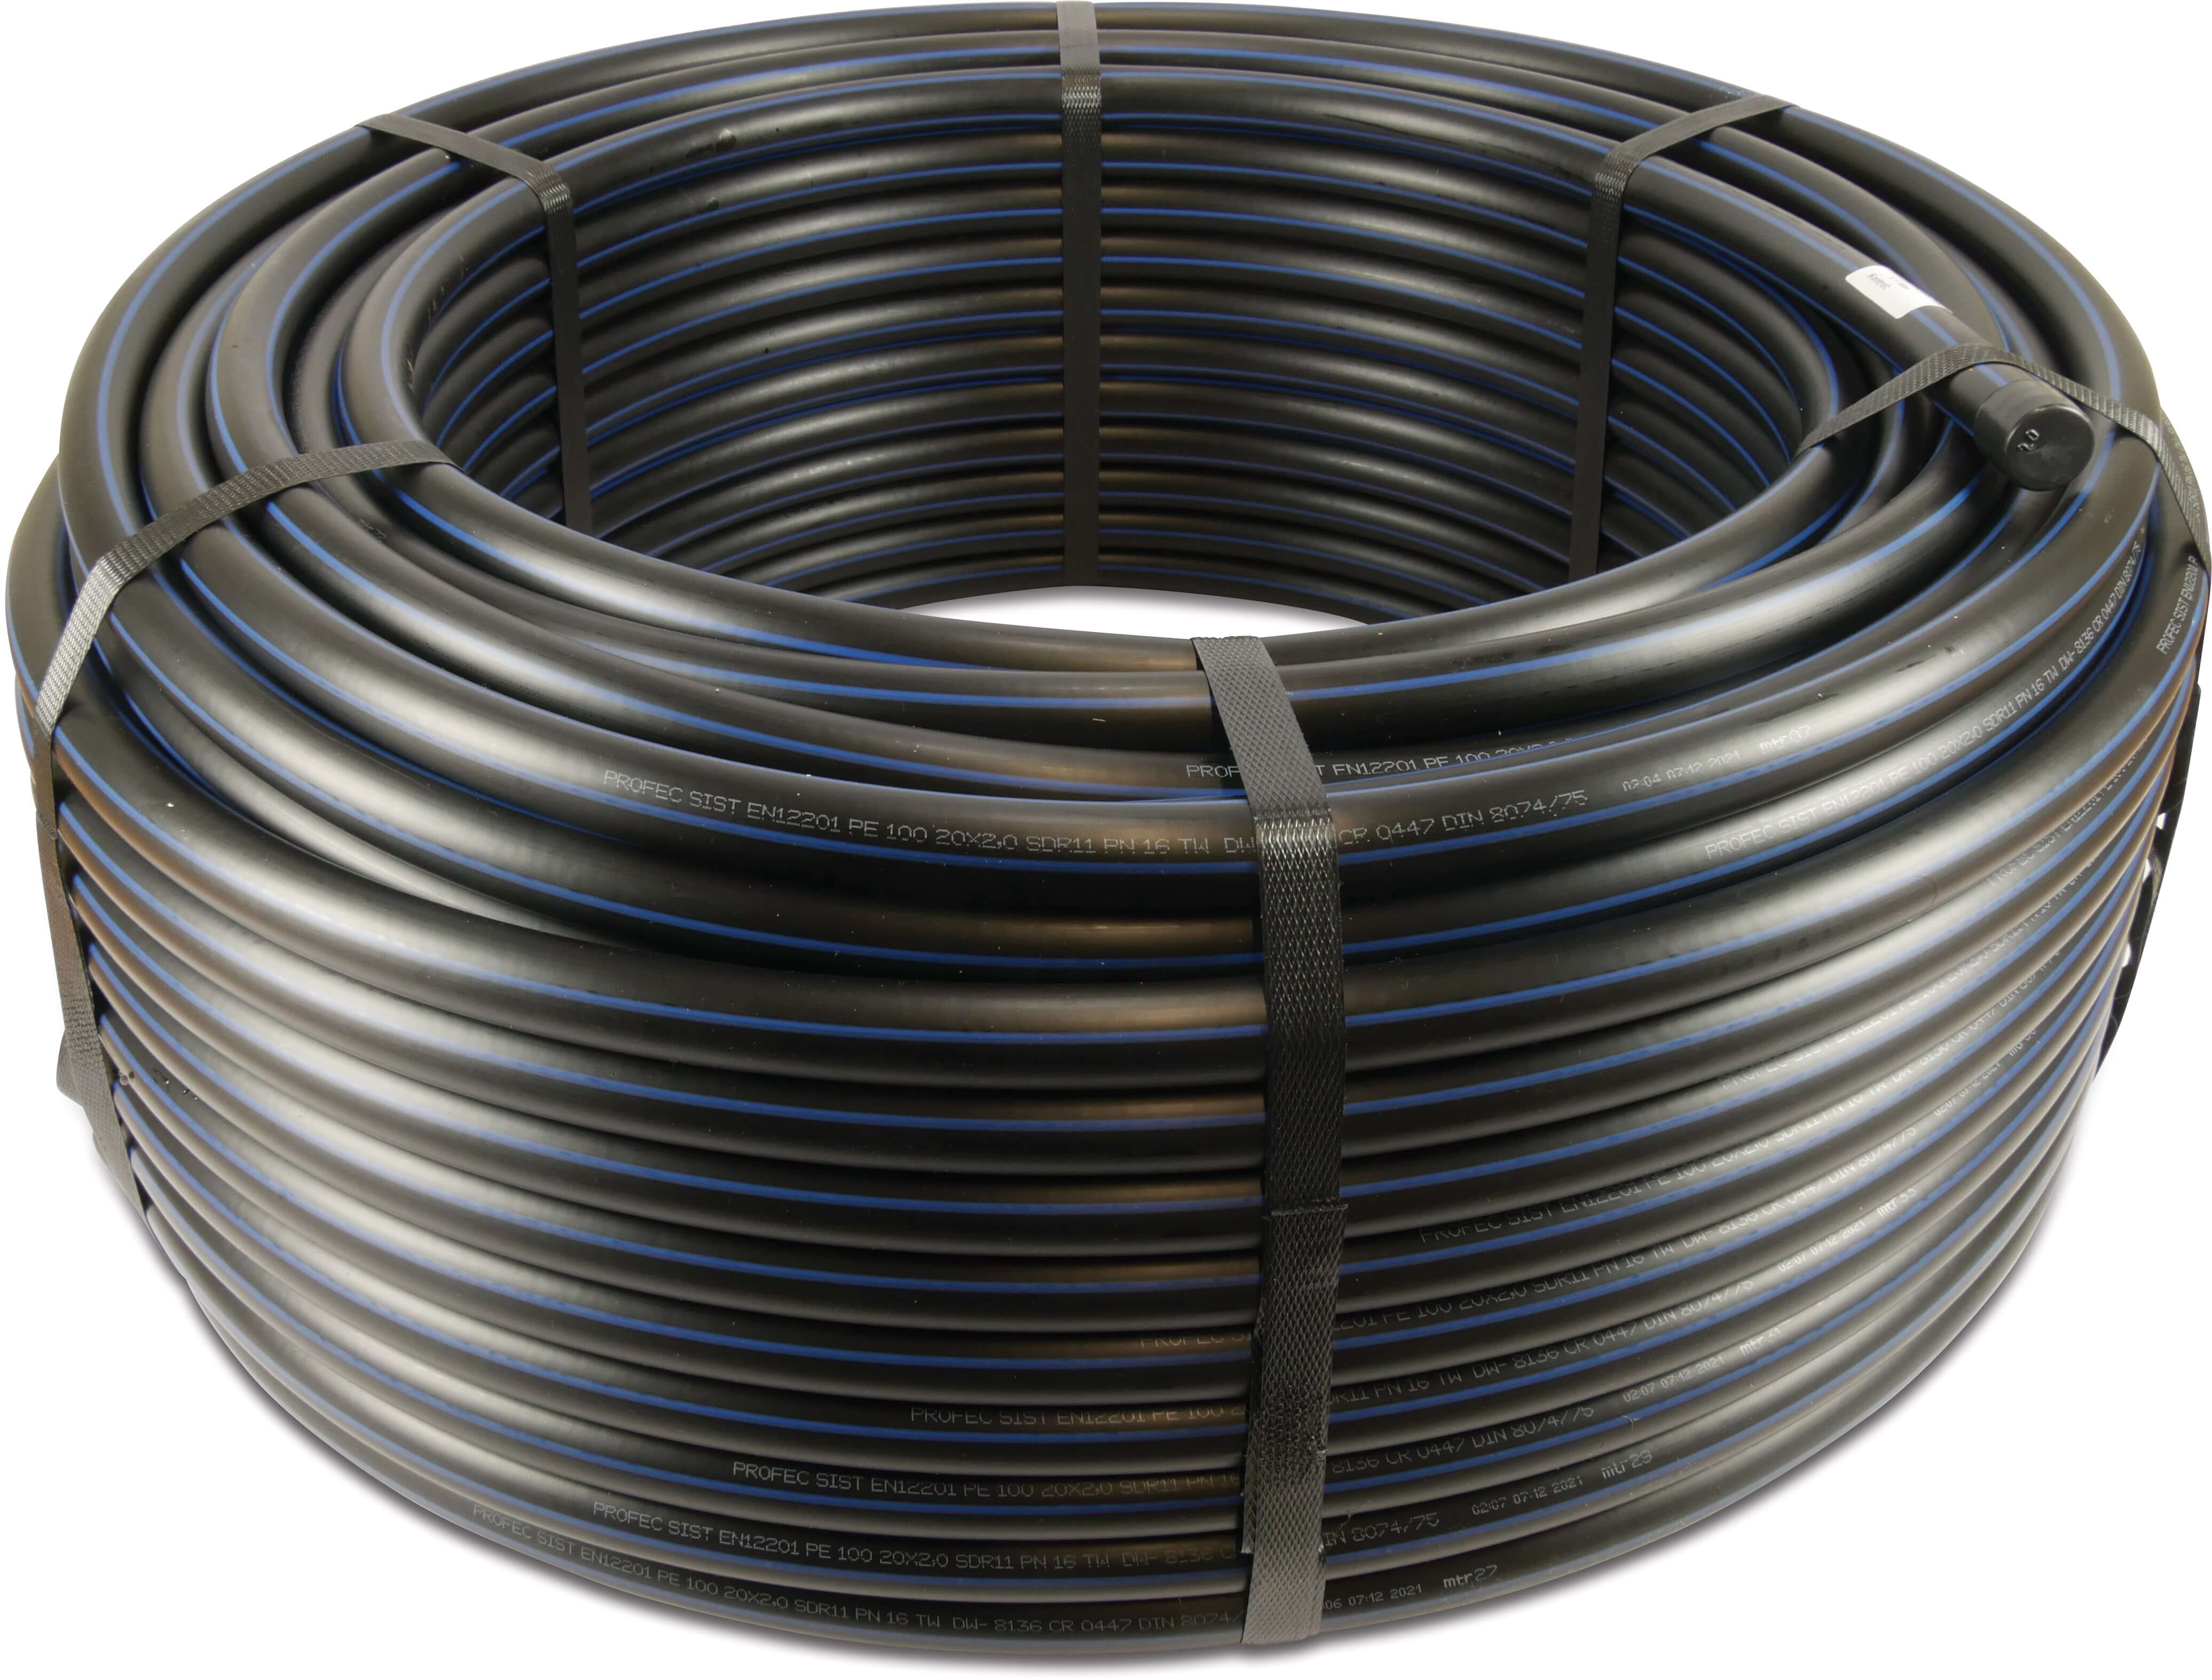 Pressure pipe PE100 20 mm x 2,0 mm plain SDR 11 16bar black/blue 100m DVGW